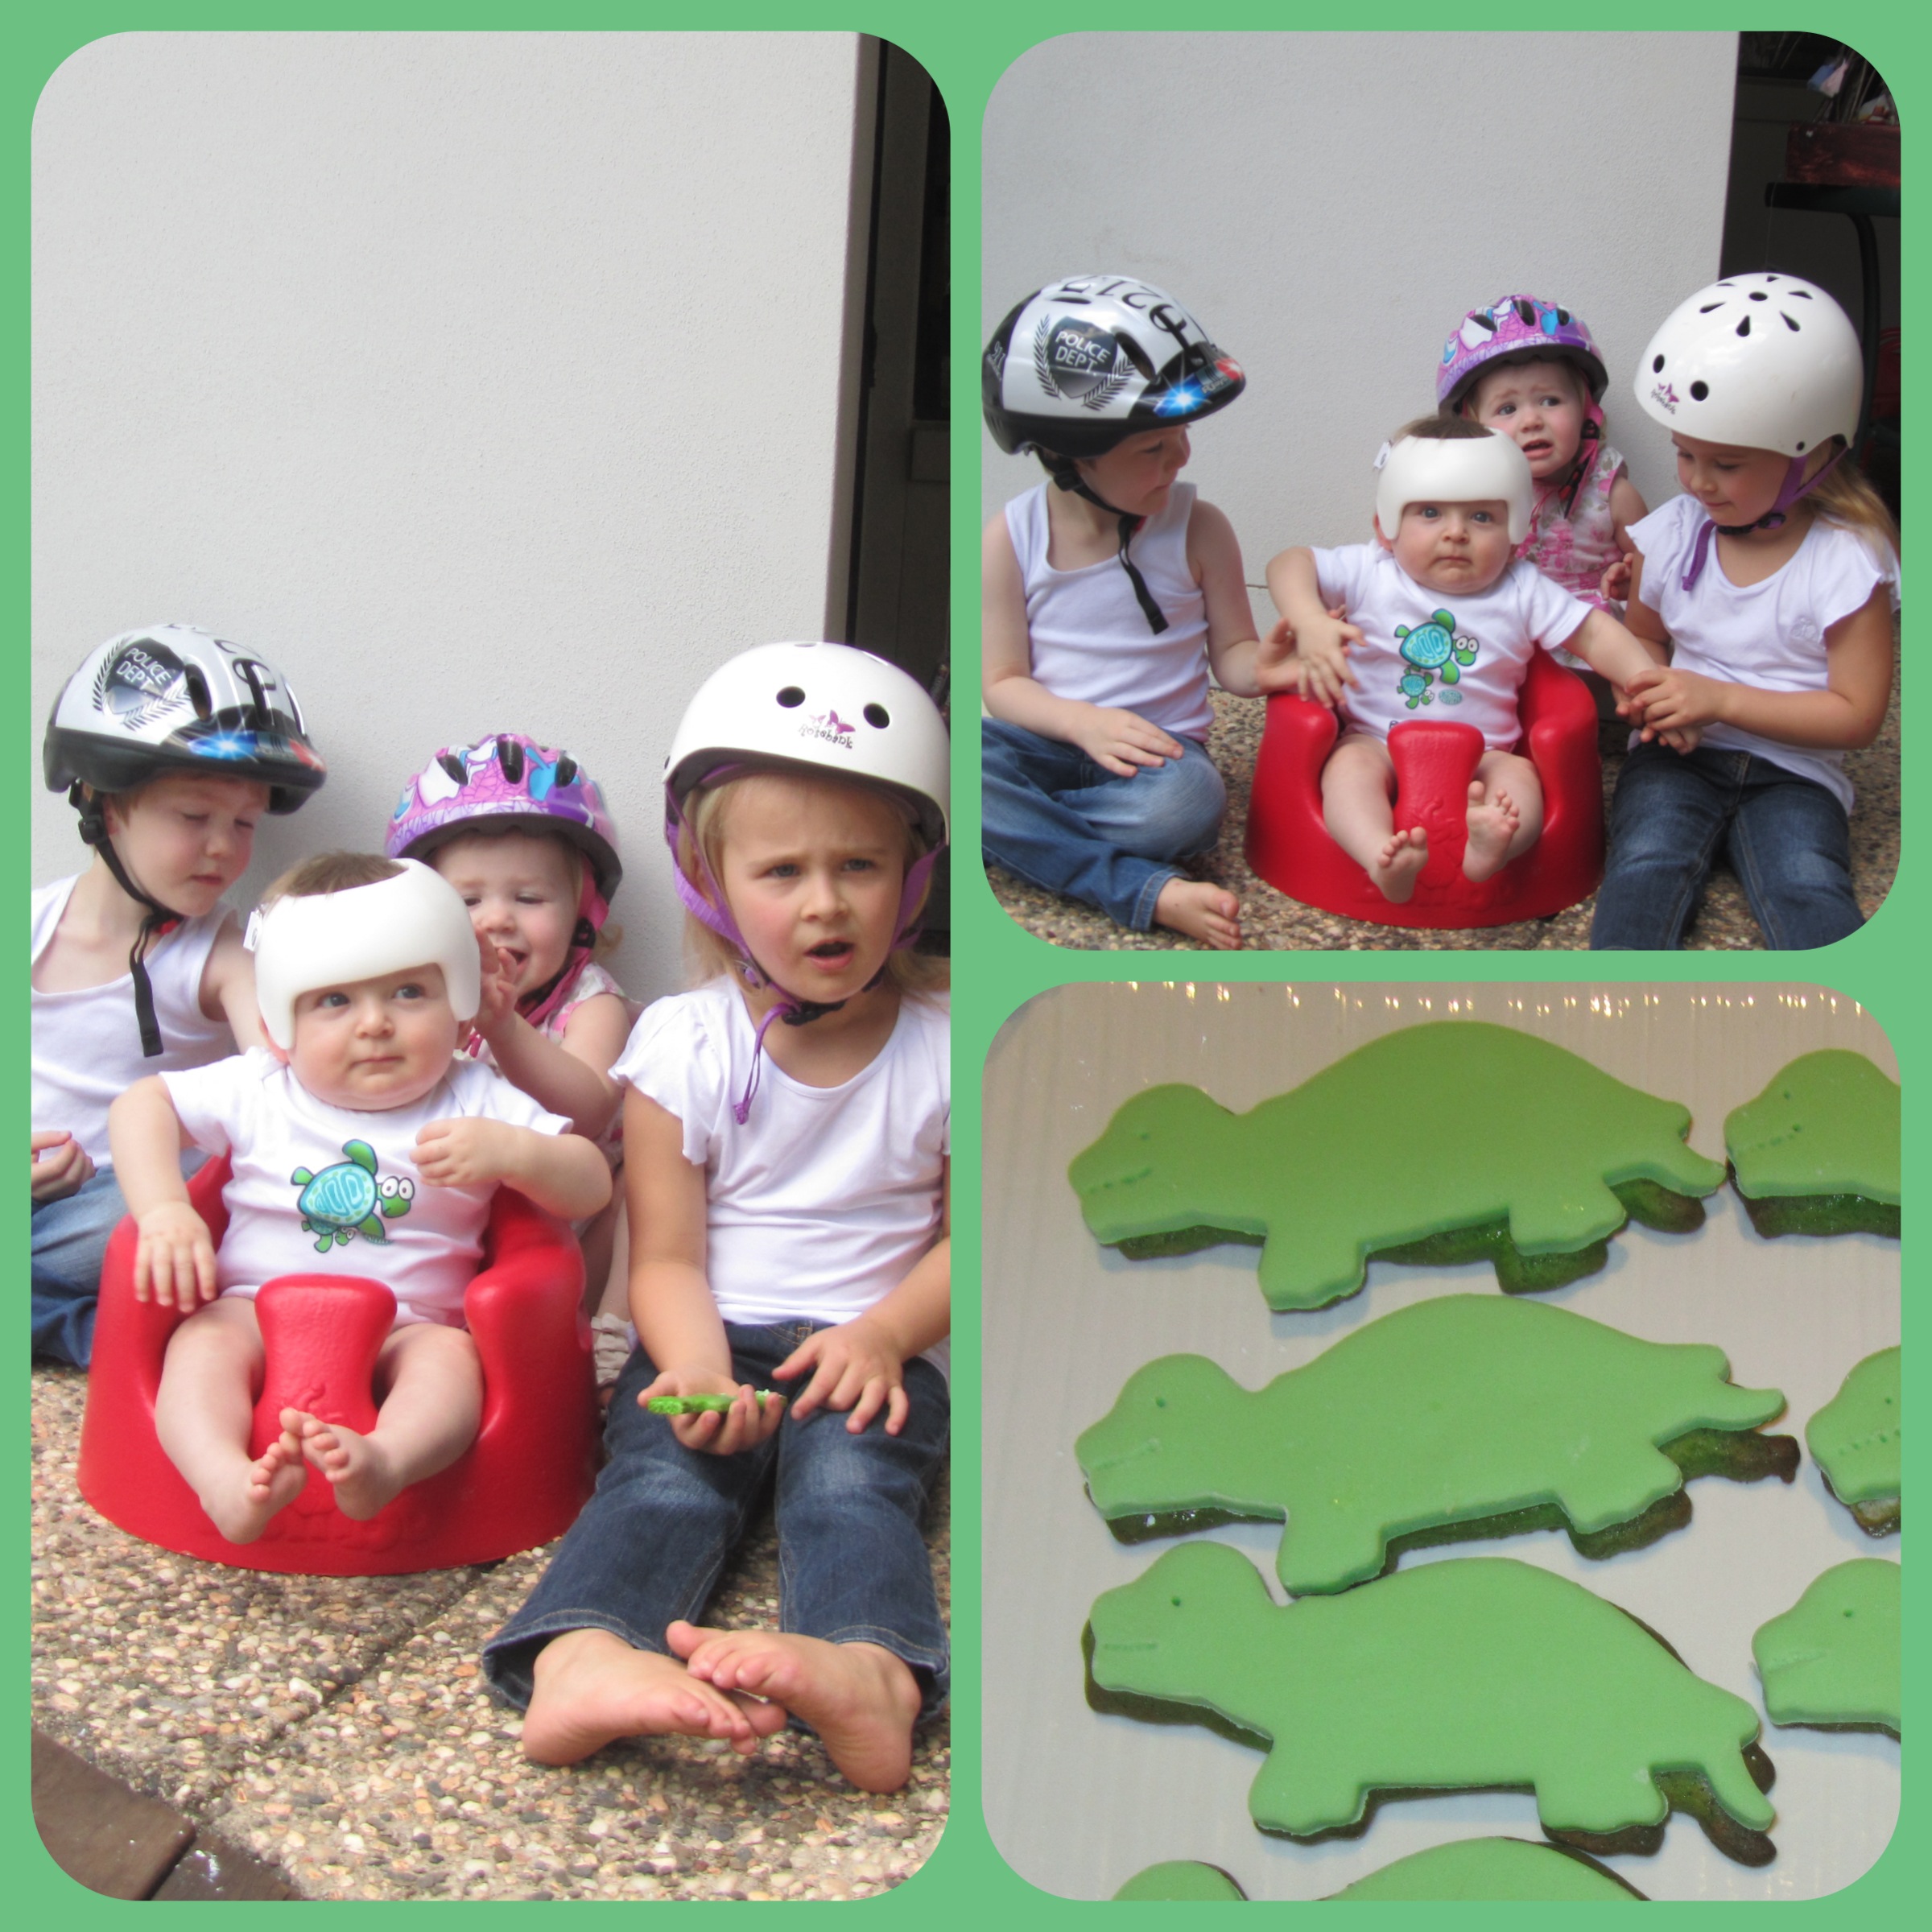 Our mini helmet party!